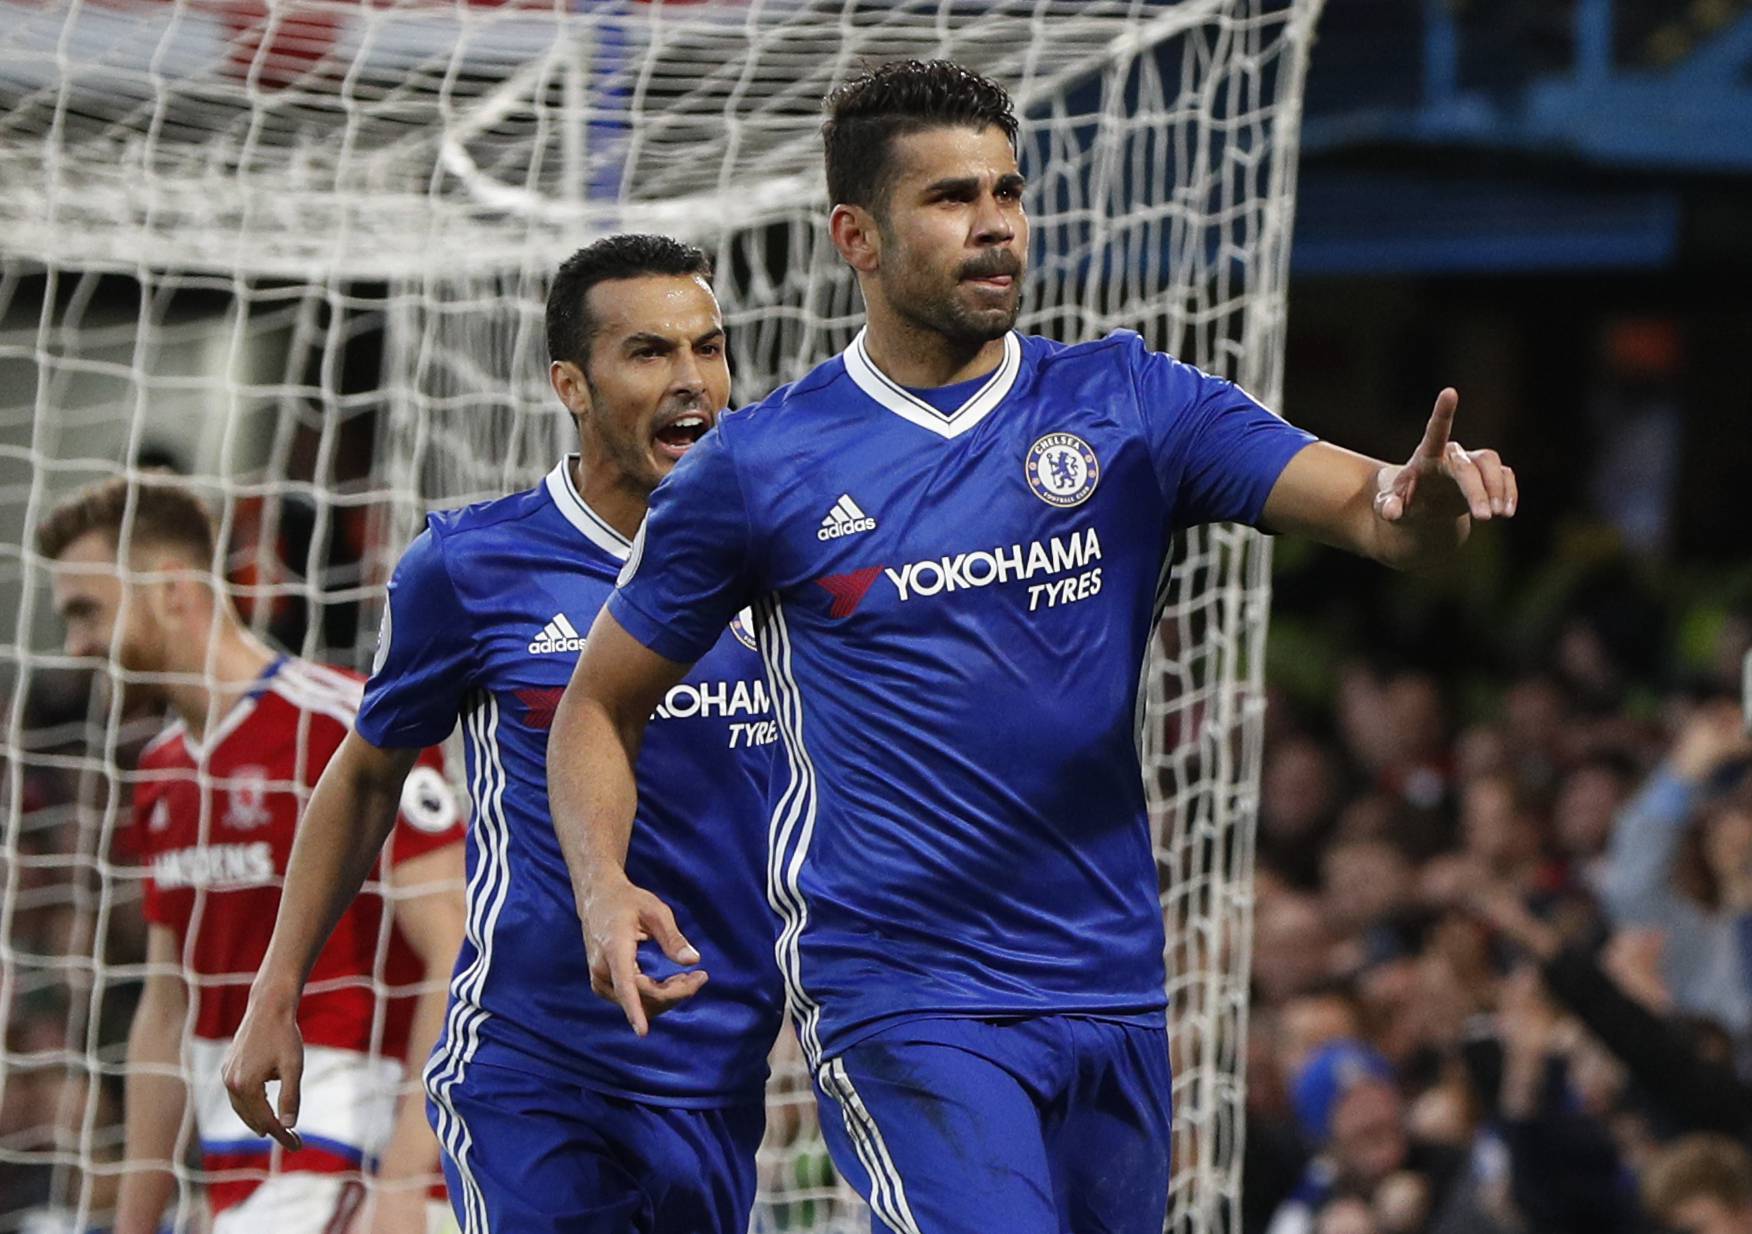 Chelsea's Diego Costa celebrates scoring their first goal with Pedro